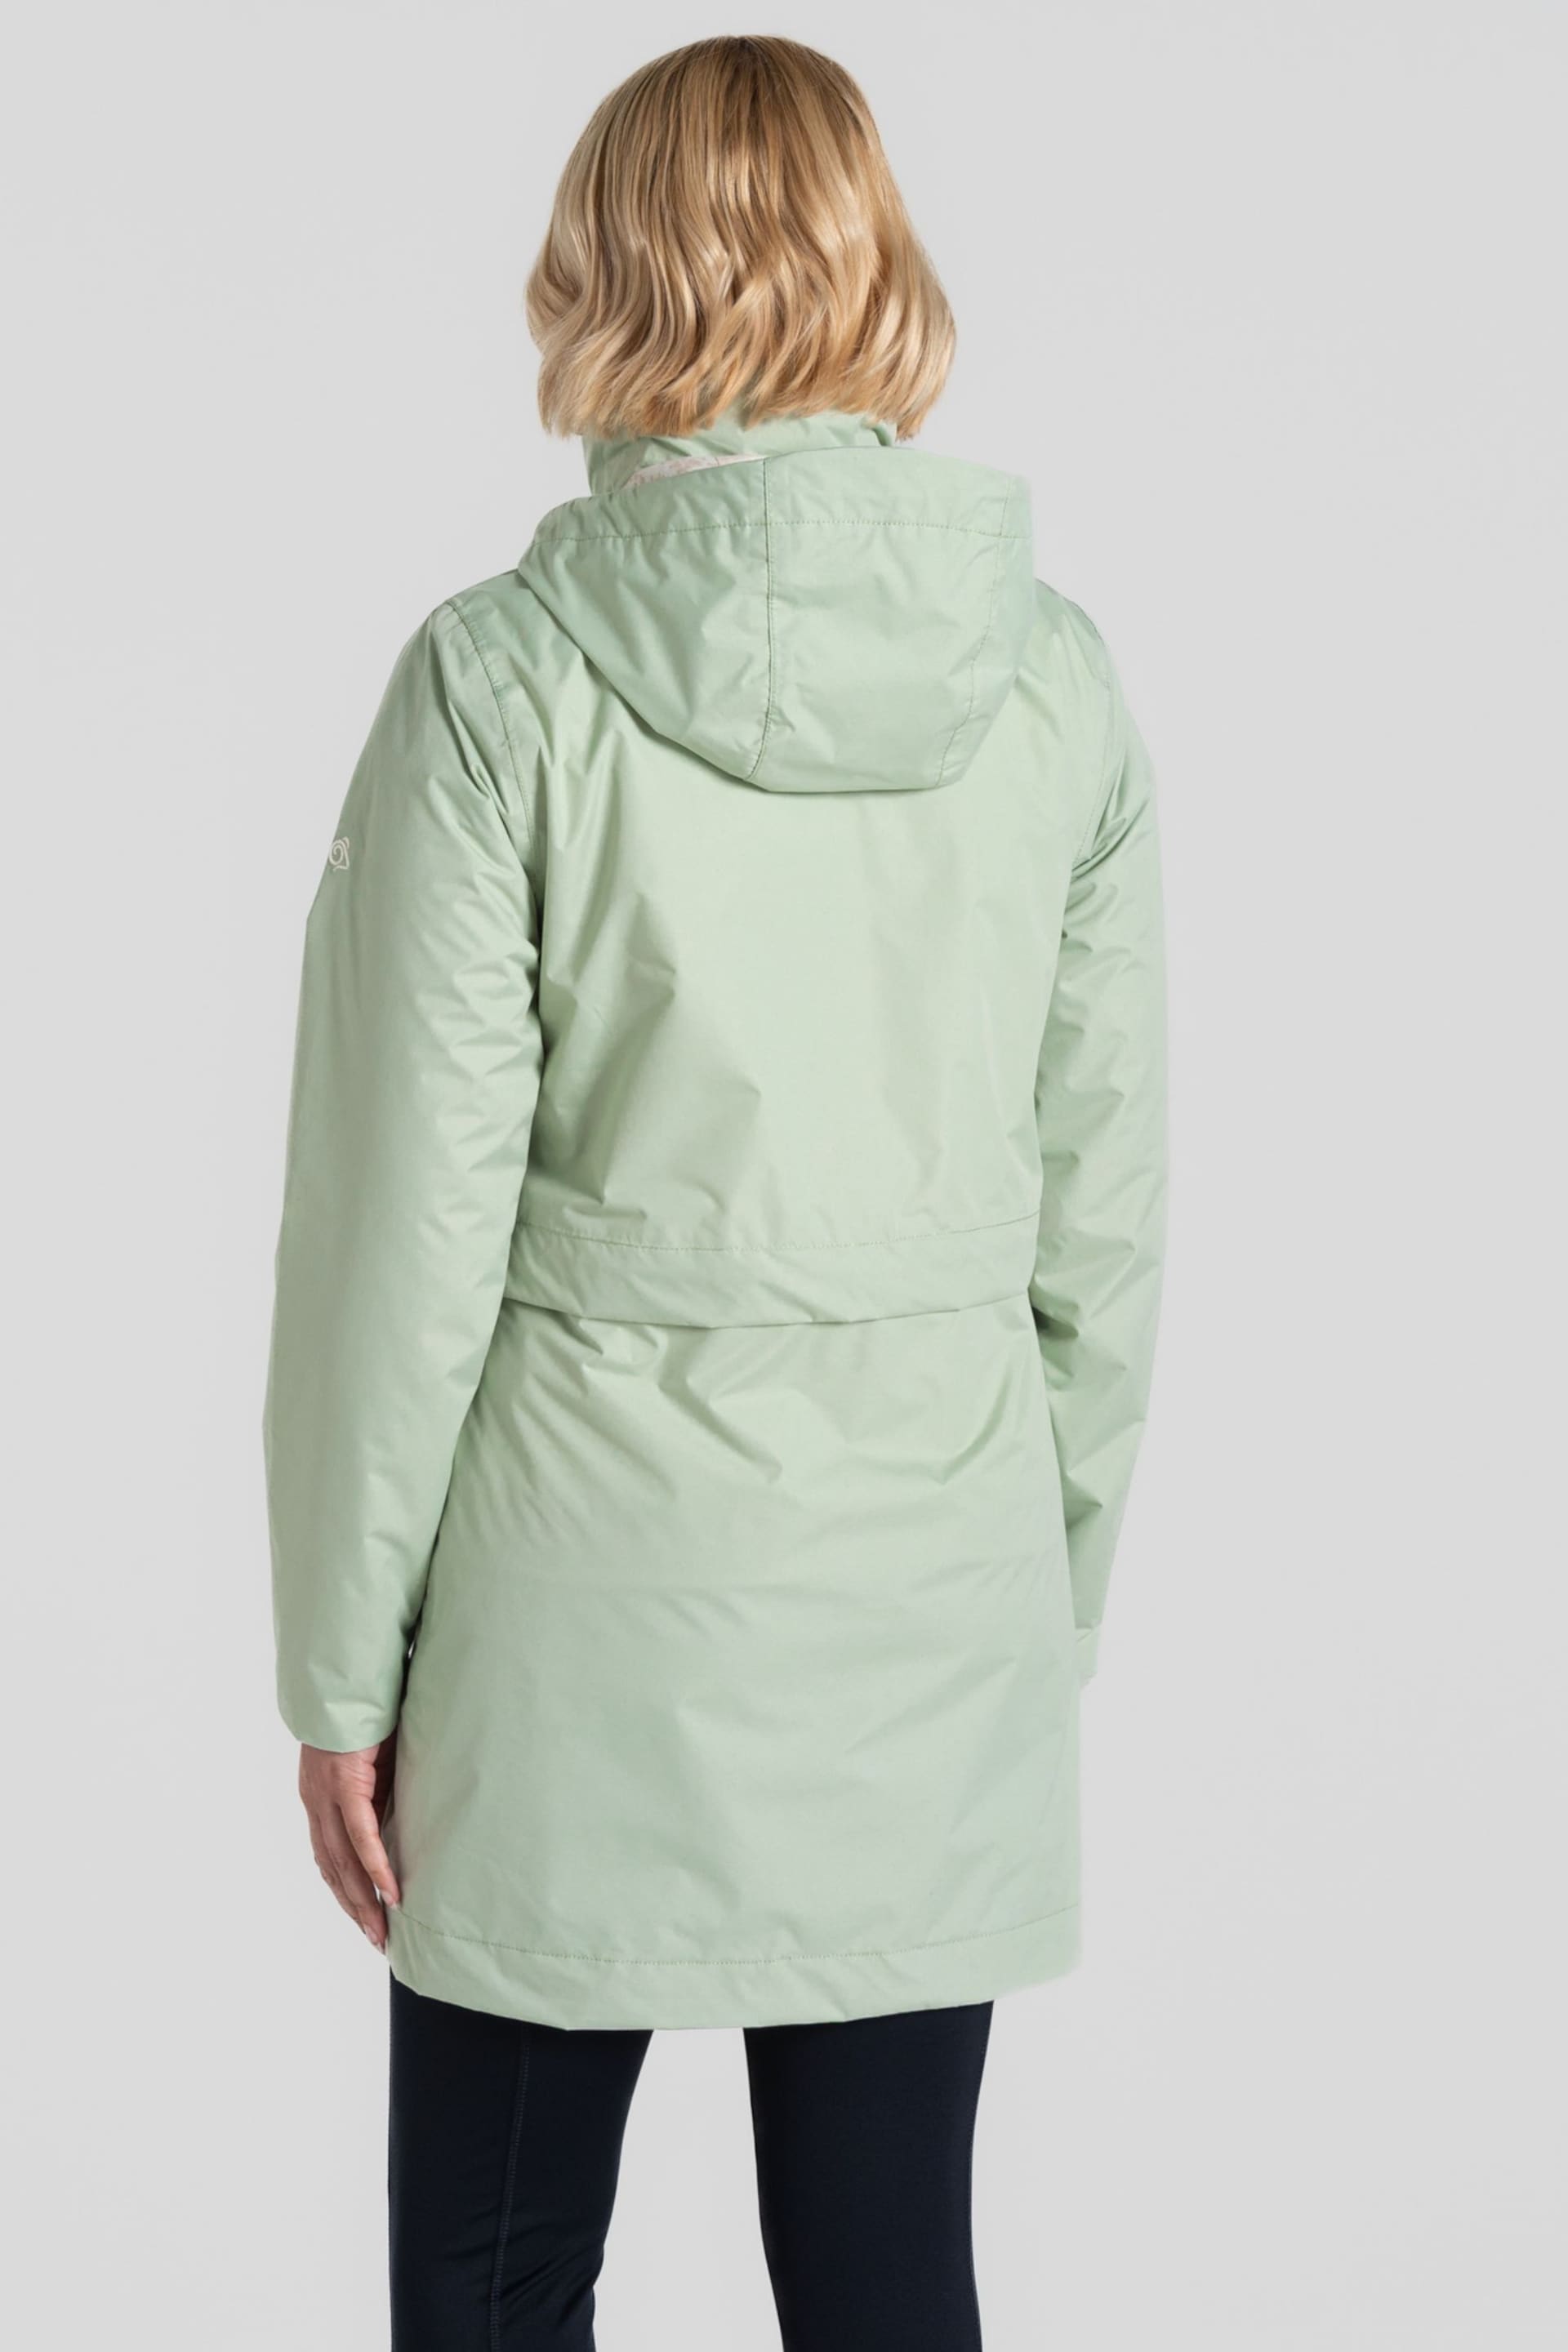 Craghoppers Green Ana Waterproof Jacket - Image 2 of 7